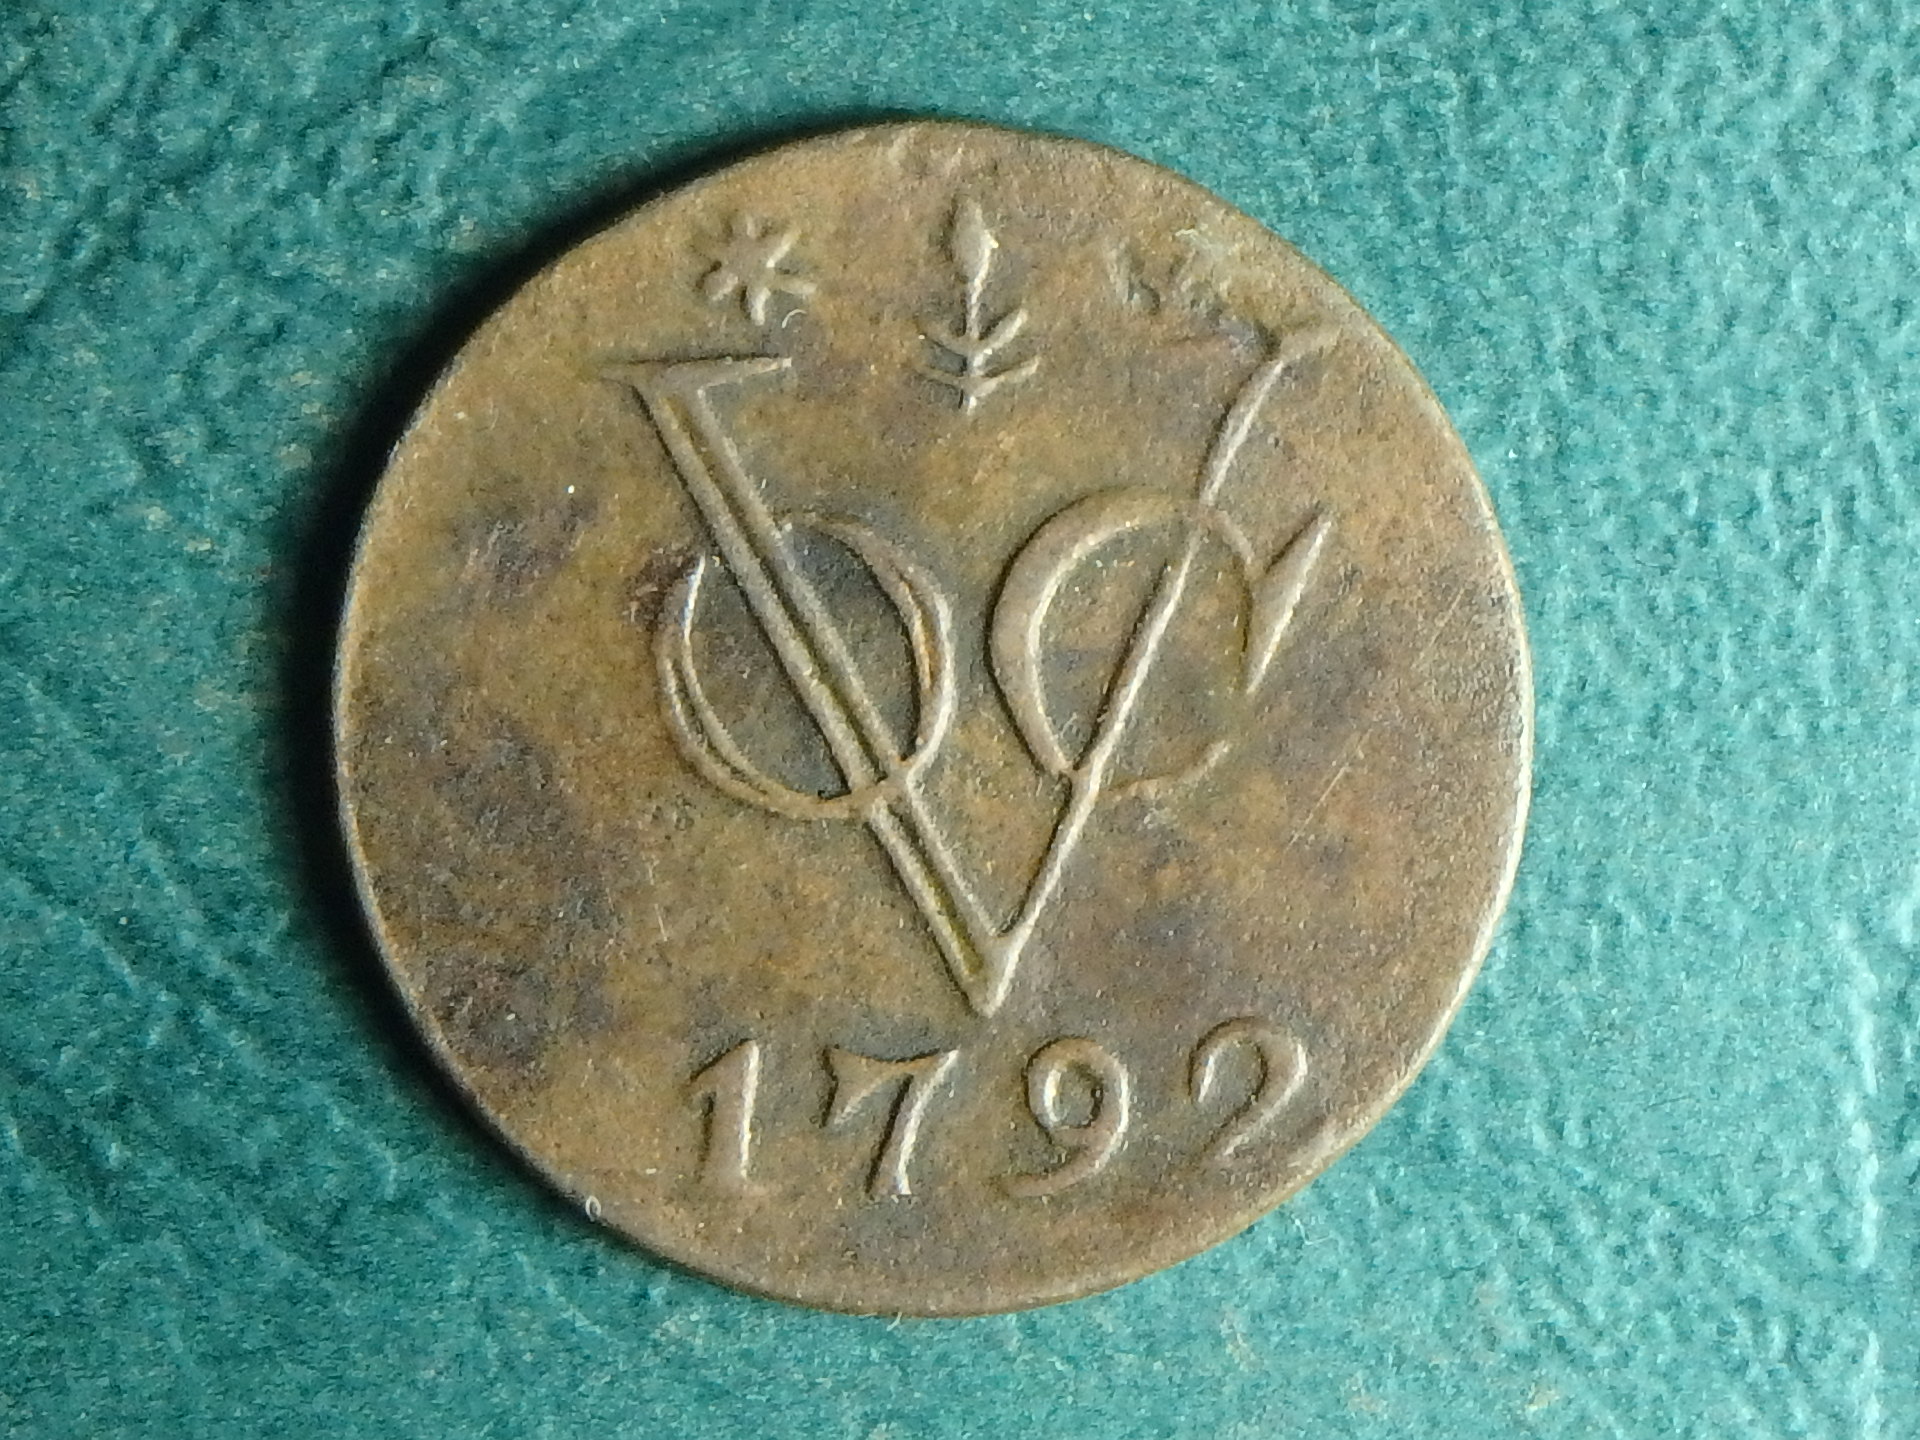 1792 G VOC 1 d rev.JPG